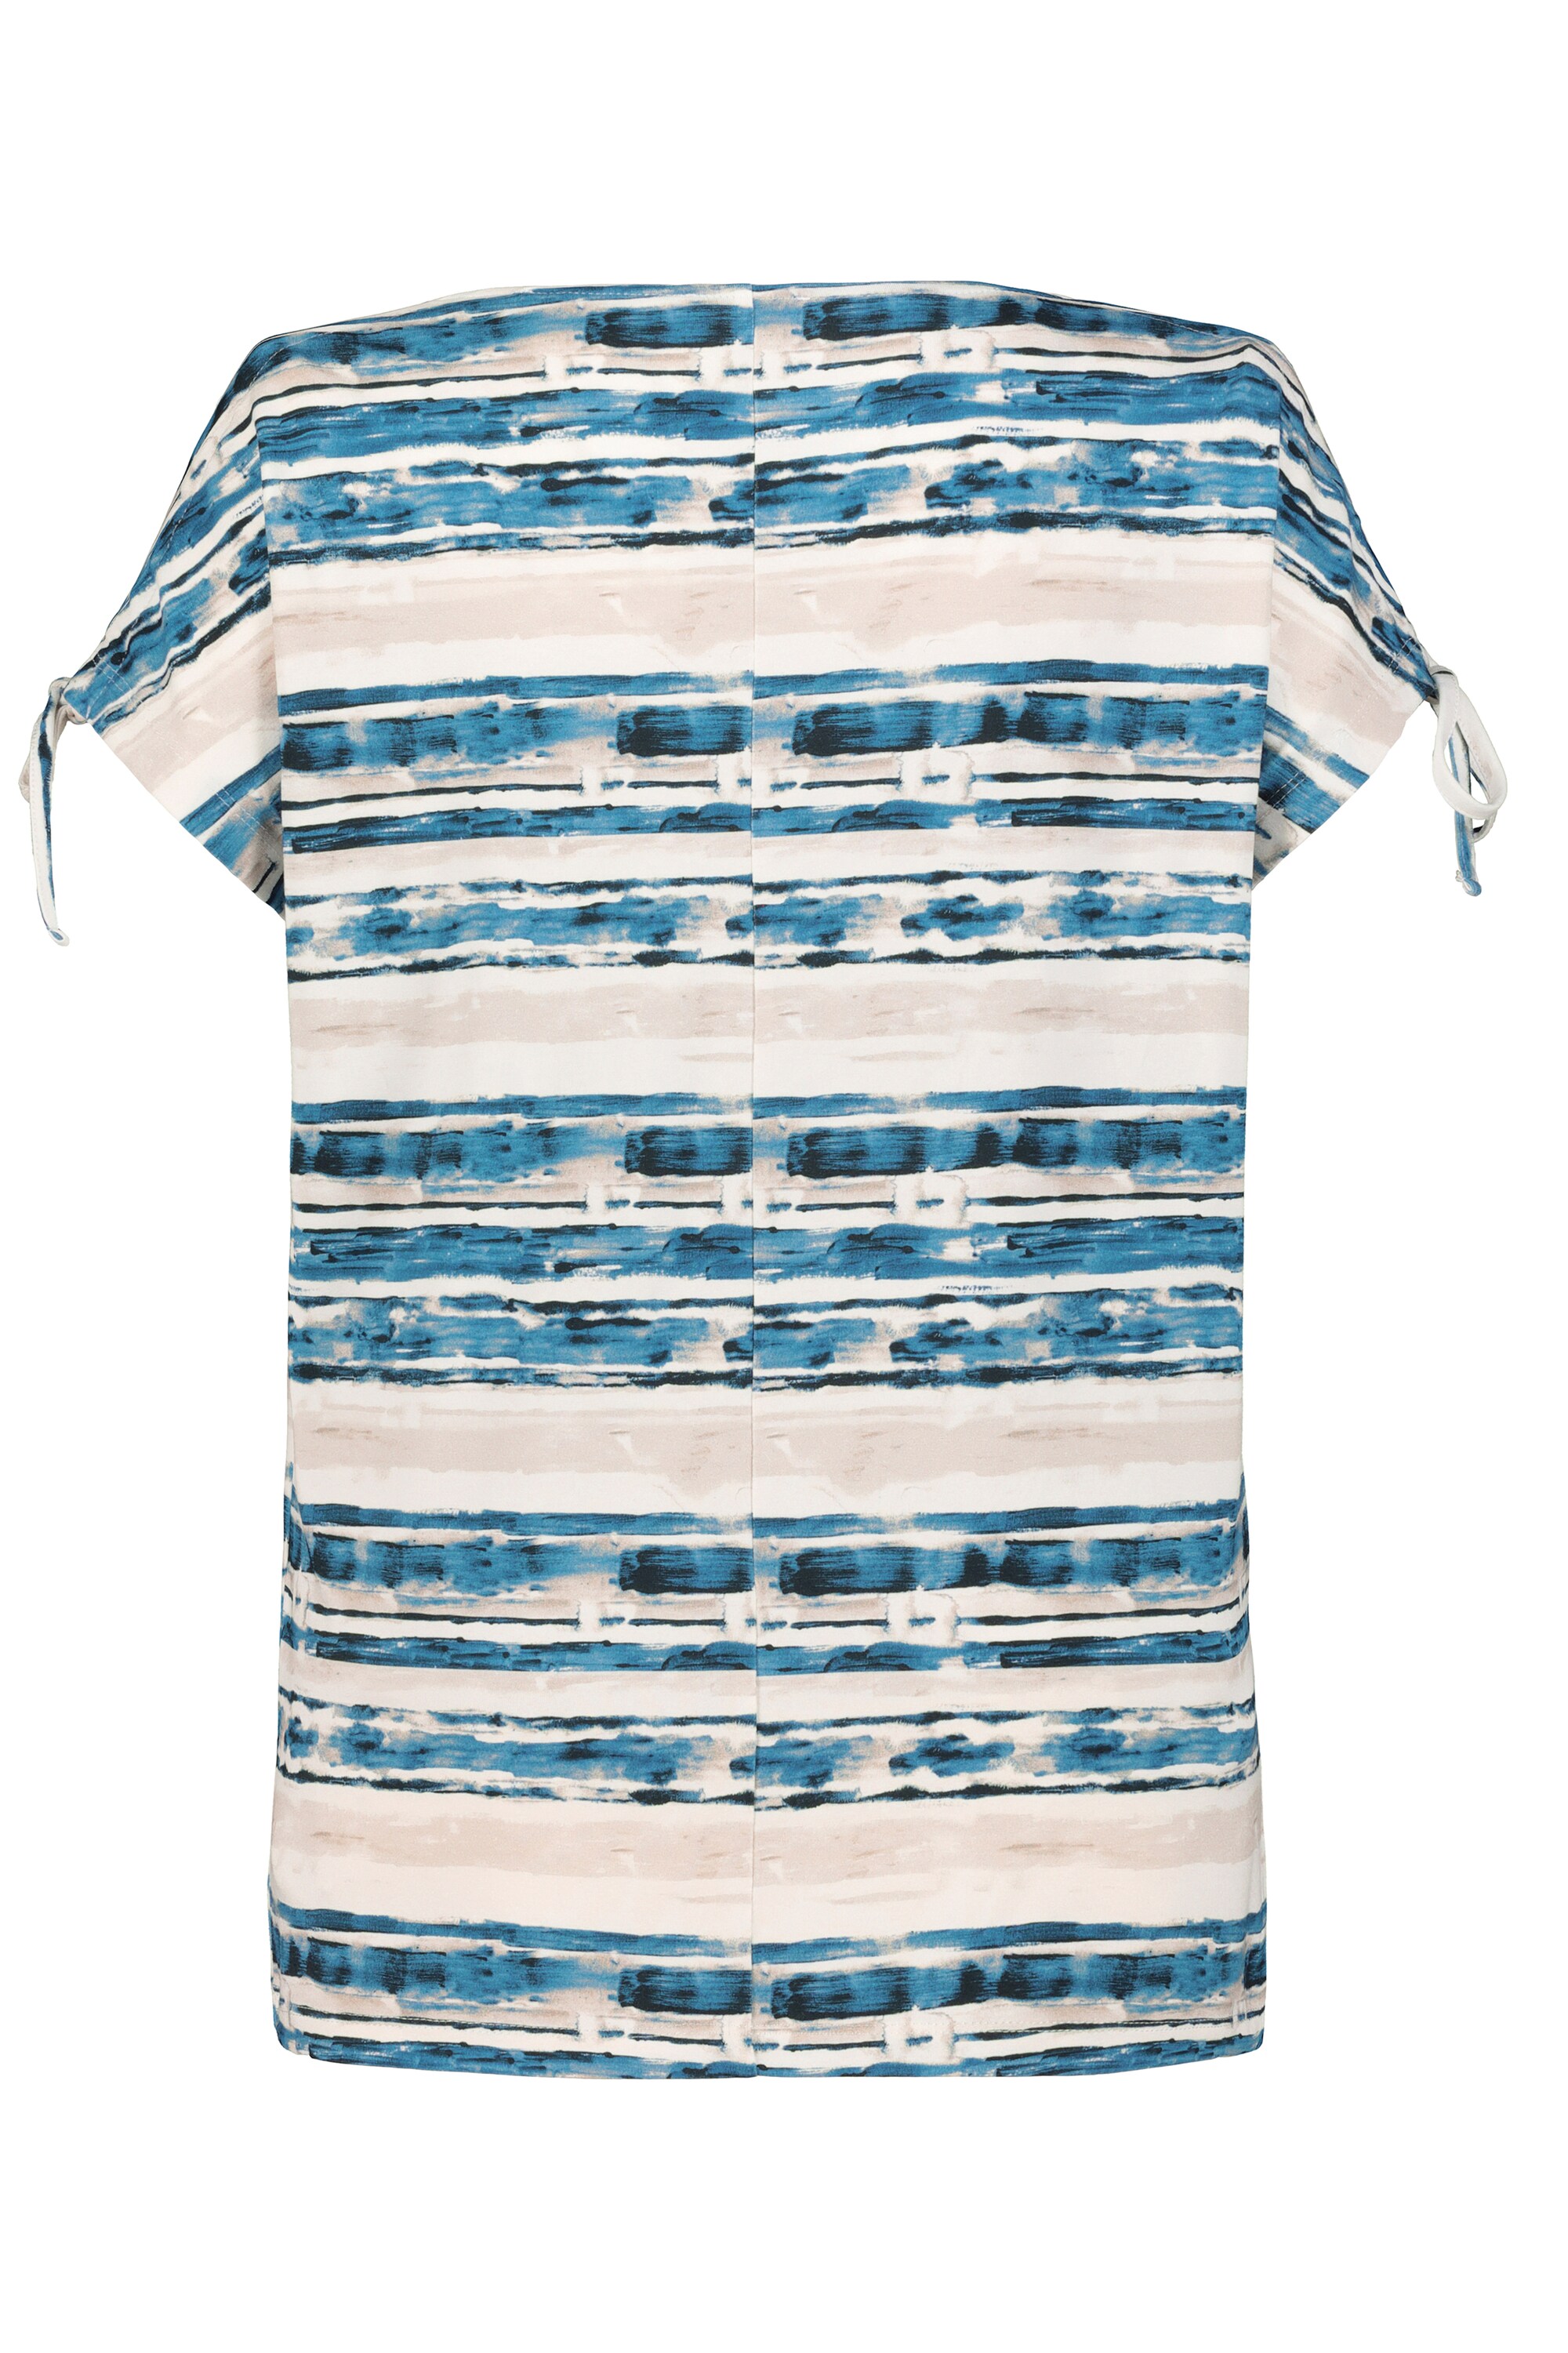 Gina Laura T-Shirt in Weiß, Blau, Dunkelblau 